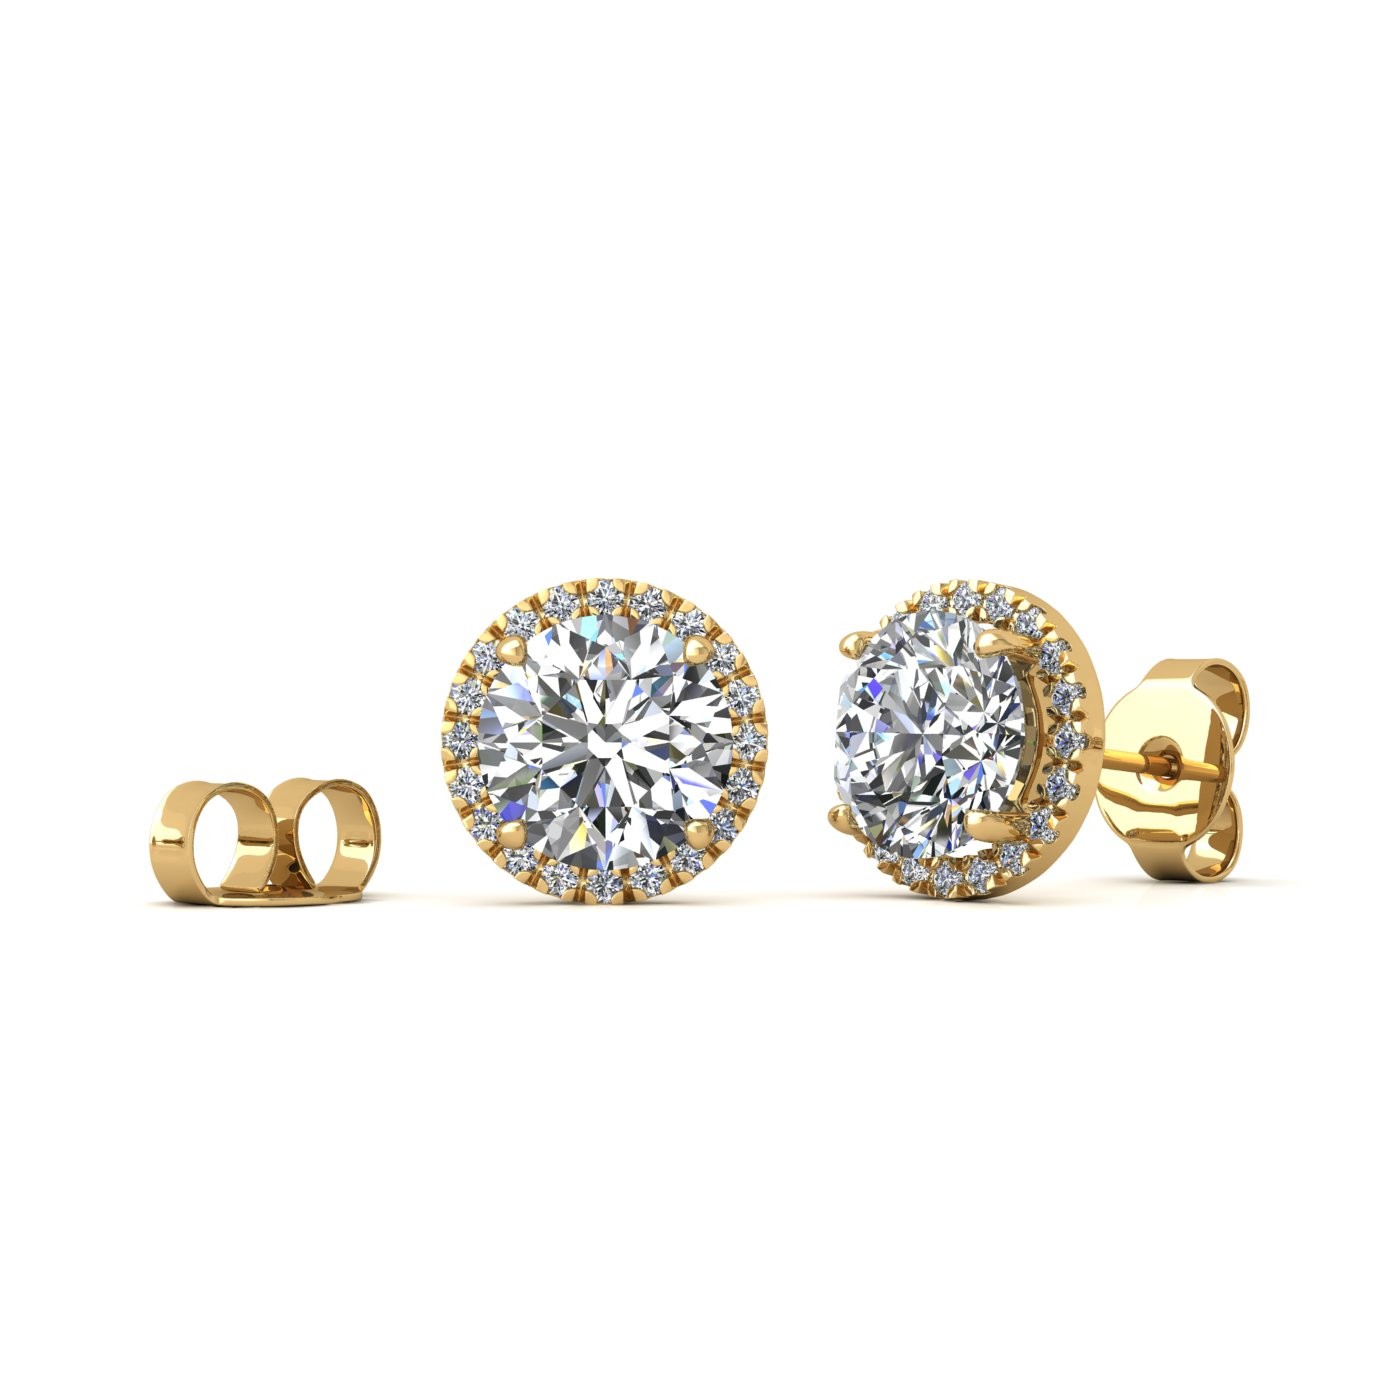 18k yellow gold  0,5 ct each (1,0 tcw) 4 prongs round shape diamond earrings with diamond pavÉ set halo Photos & images